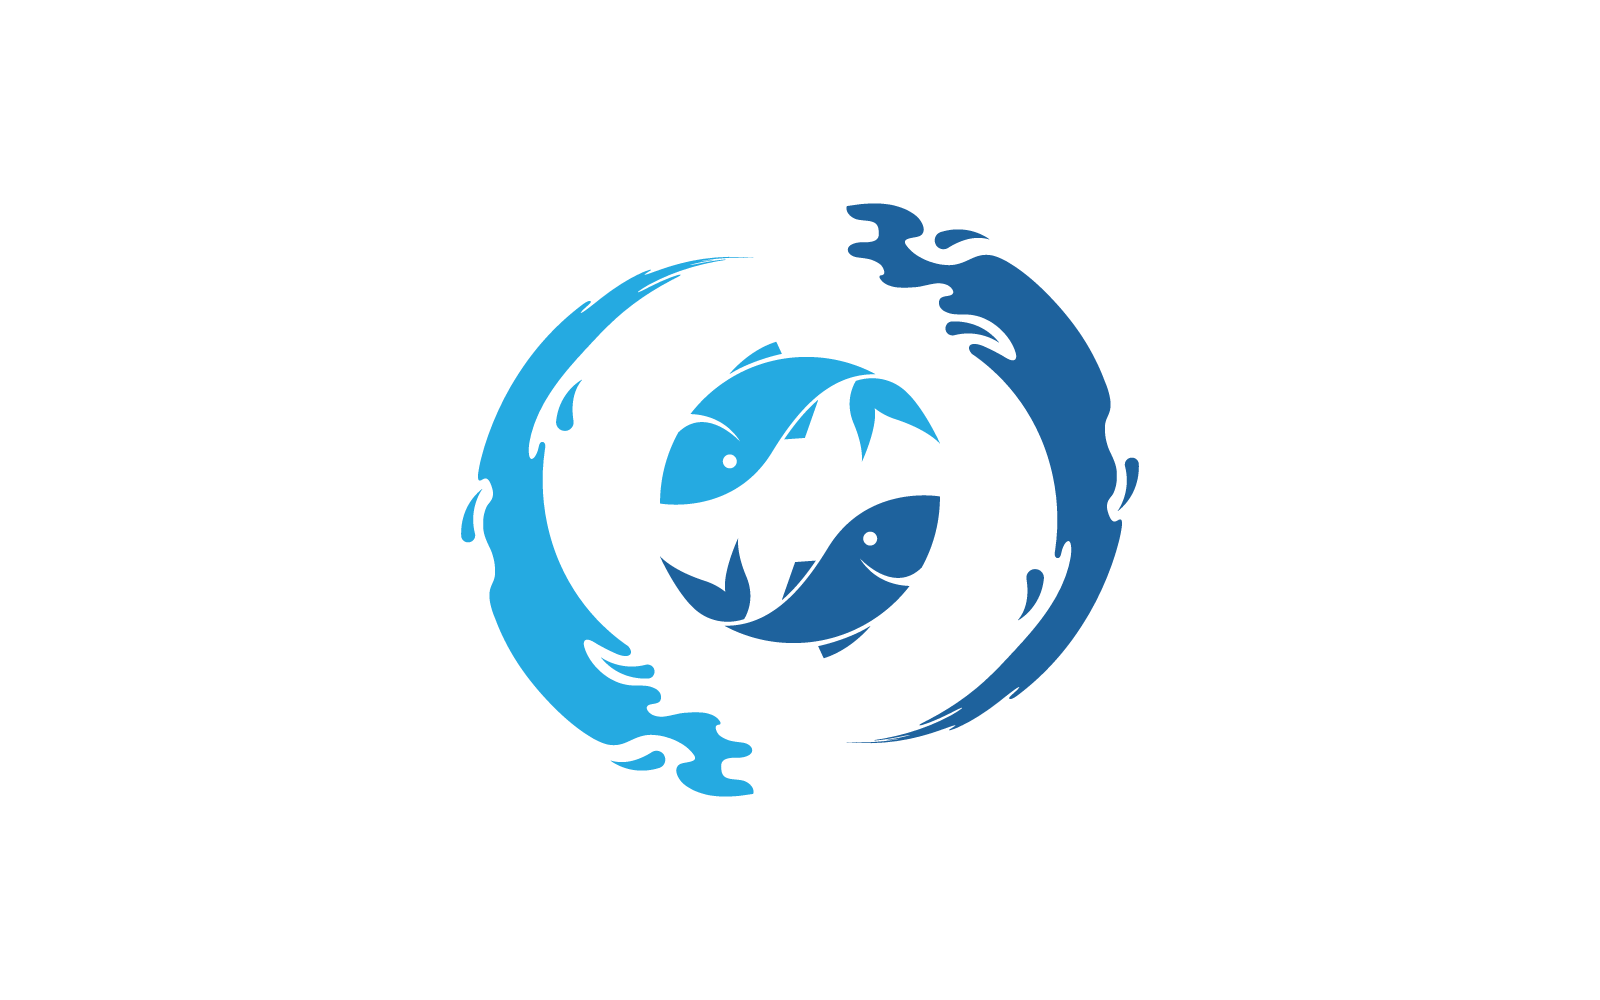 Fish illustration design logo vector template